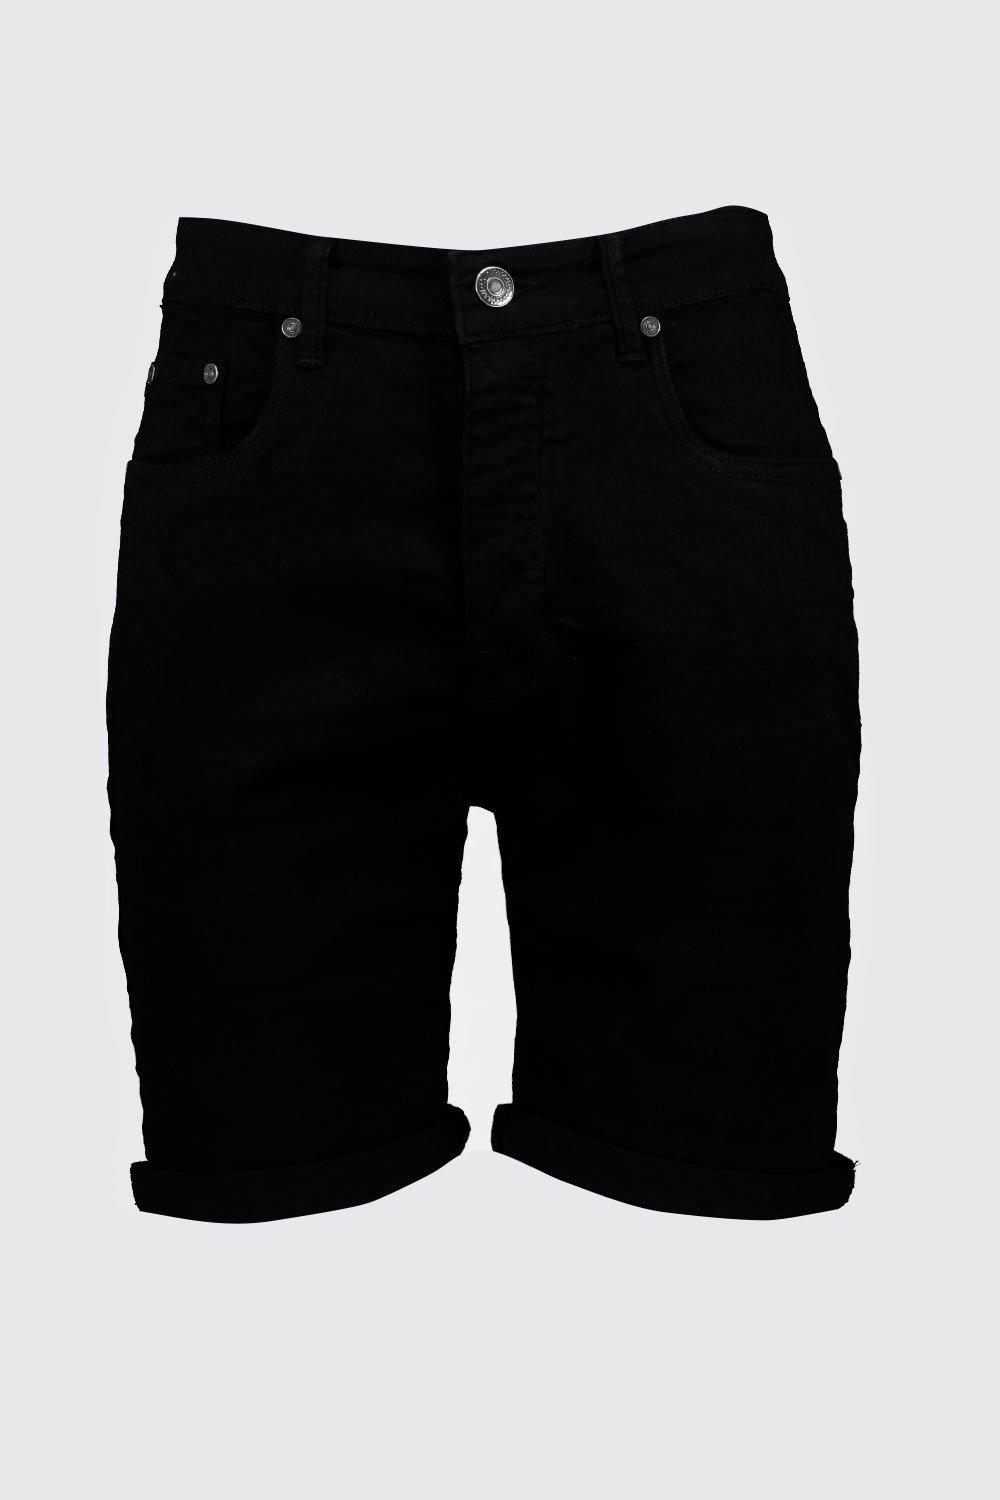 tall black denim shorts